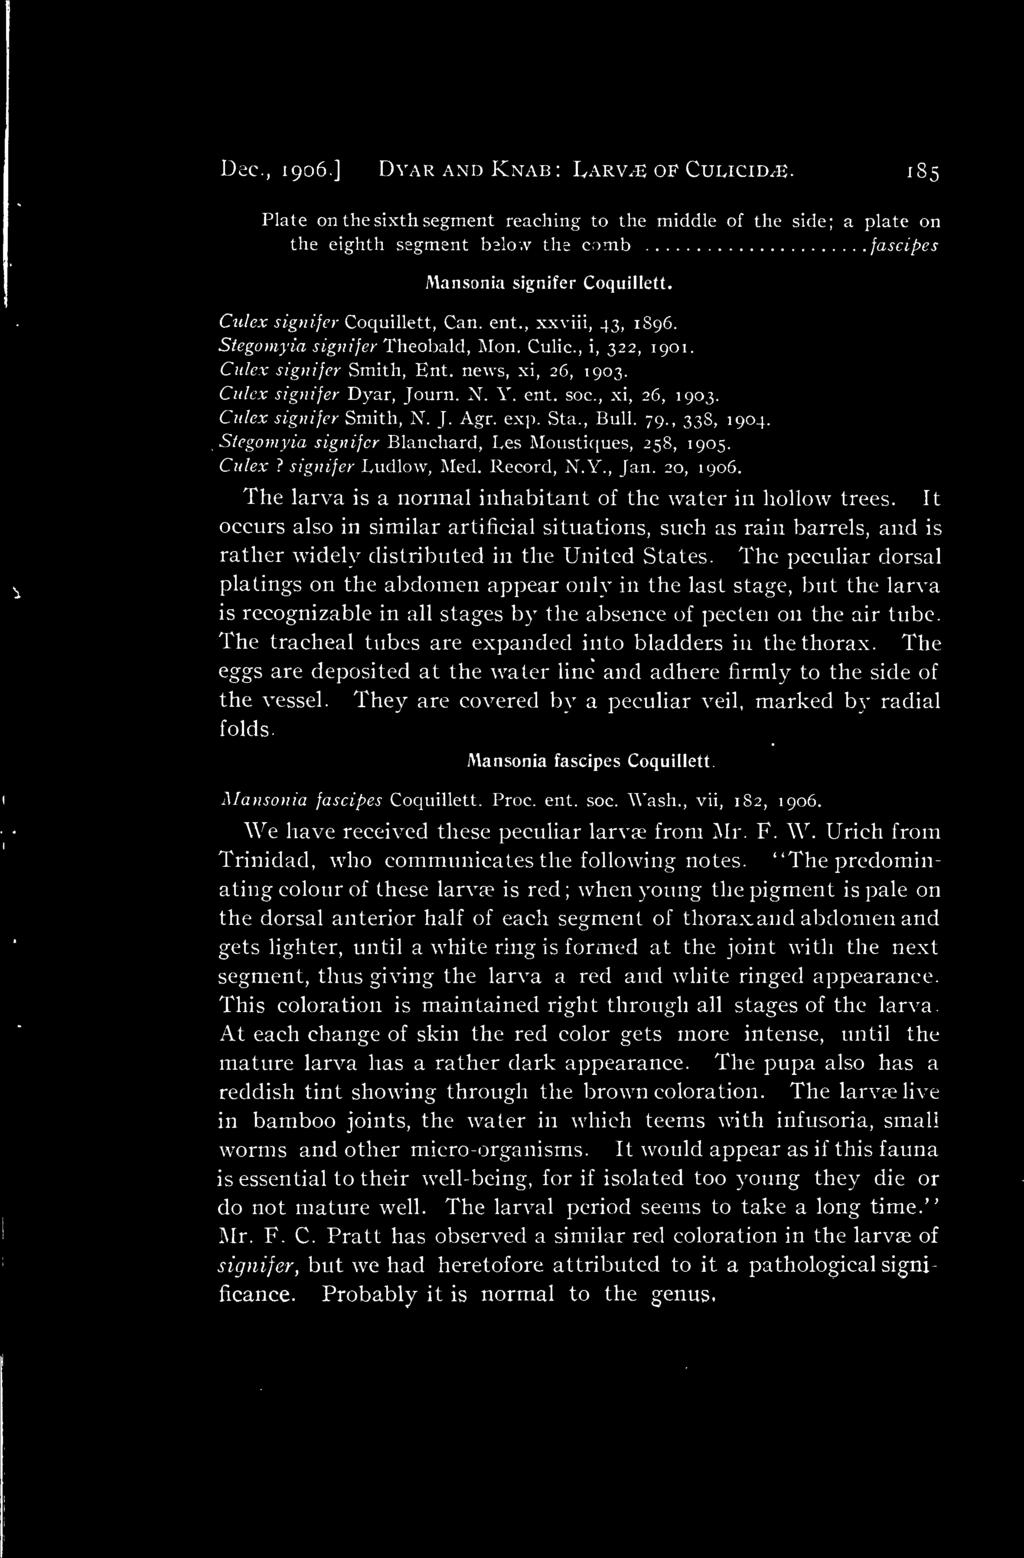 Culex signifer Smith, N. J. Agr. exp. Sta., Bull. 79., 338, 1904. Stegomyia signifer Blanchard, Les Moustiques, 258, 1905. Culex? signifer Ludlow, Med. Record, N.Y., Jan. 20, 1906.